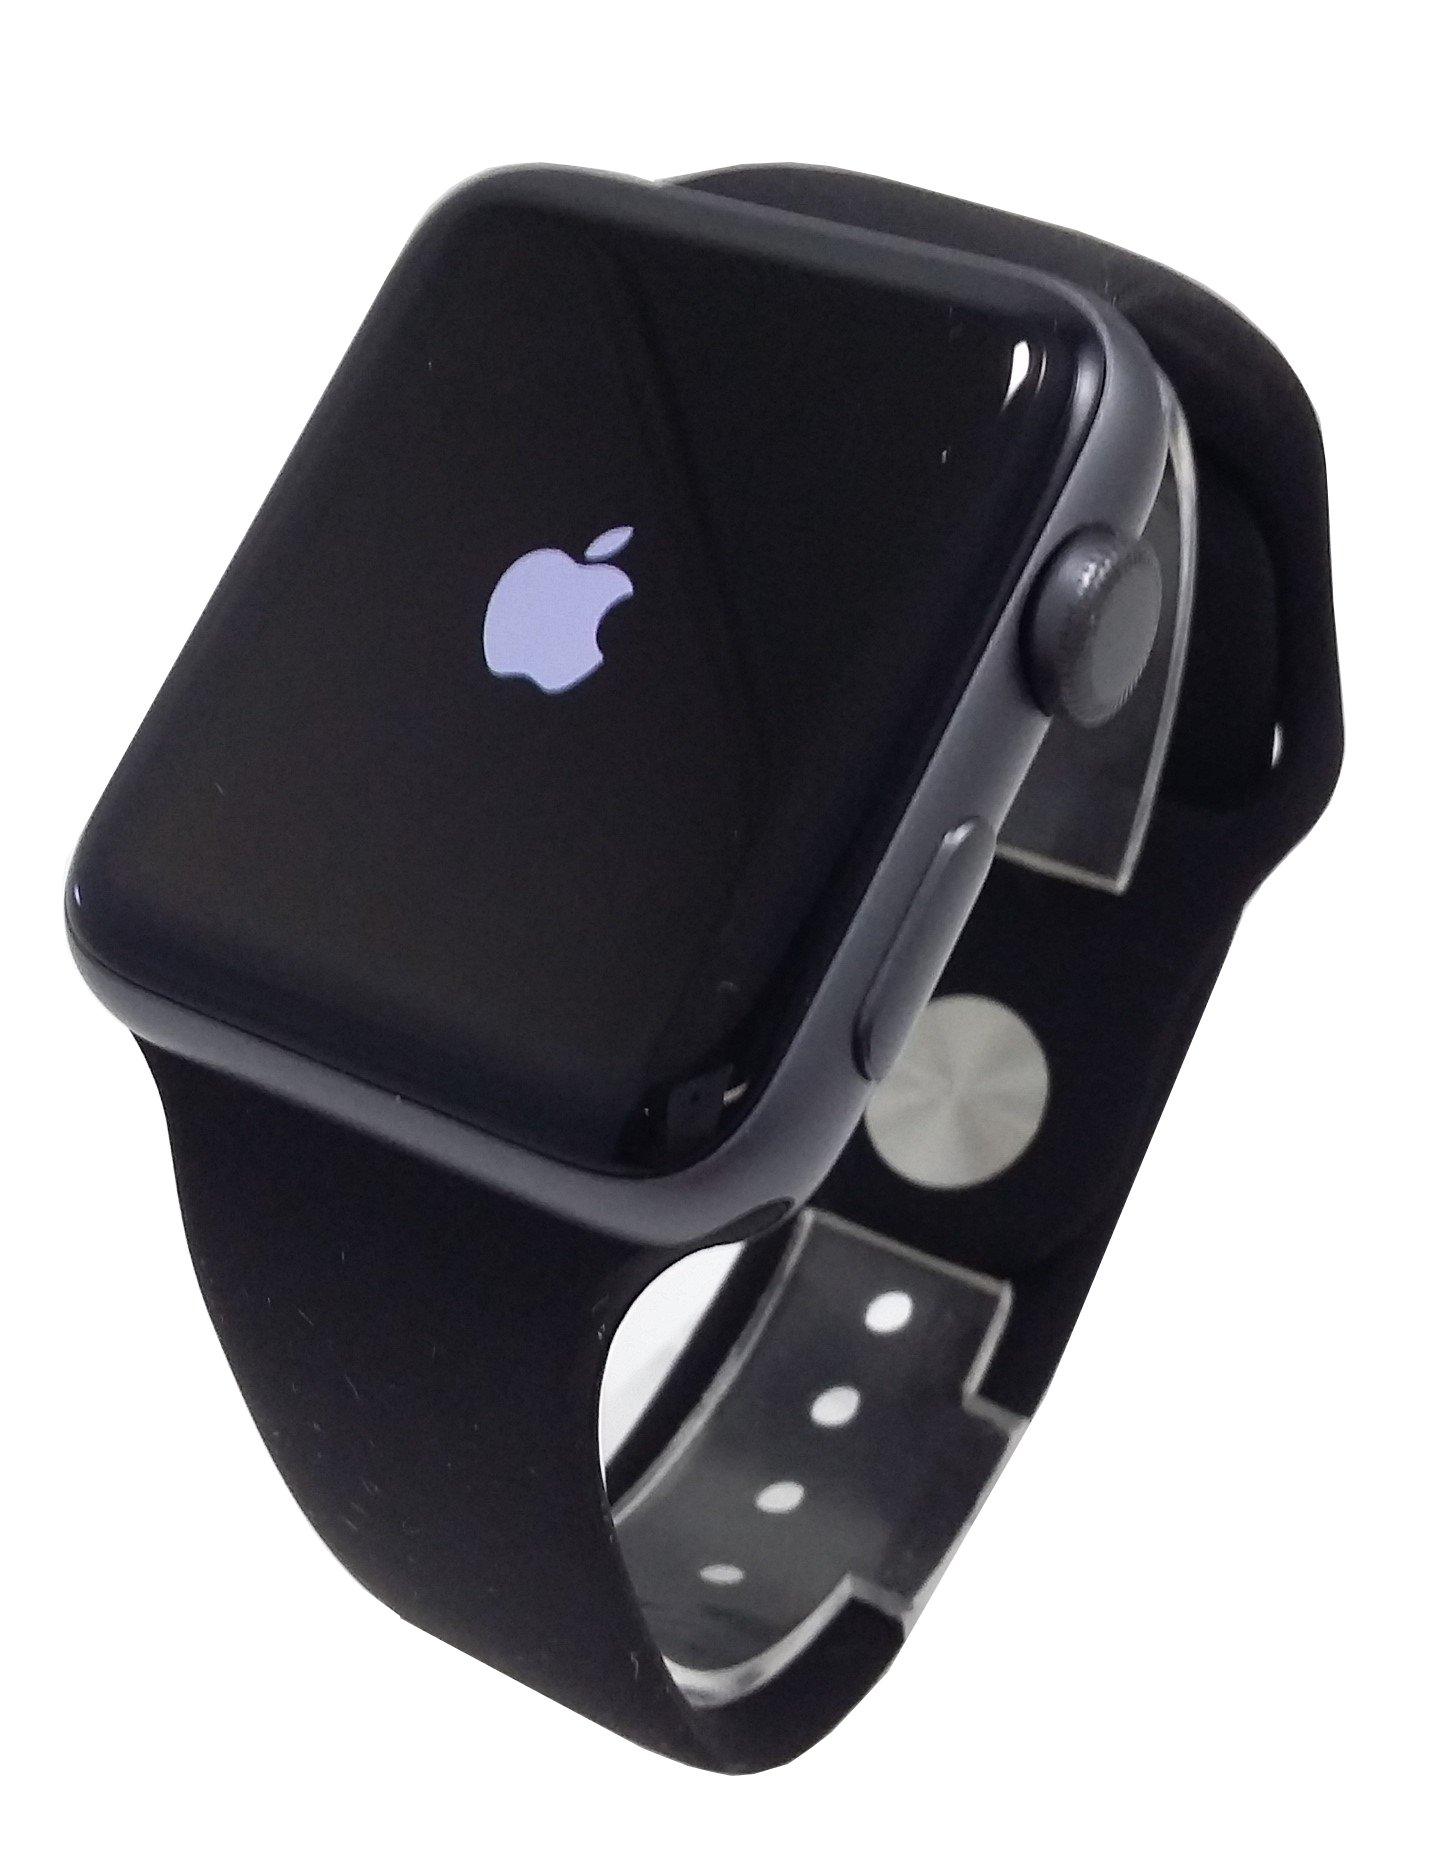 apple watch series 2 42mm aluminum